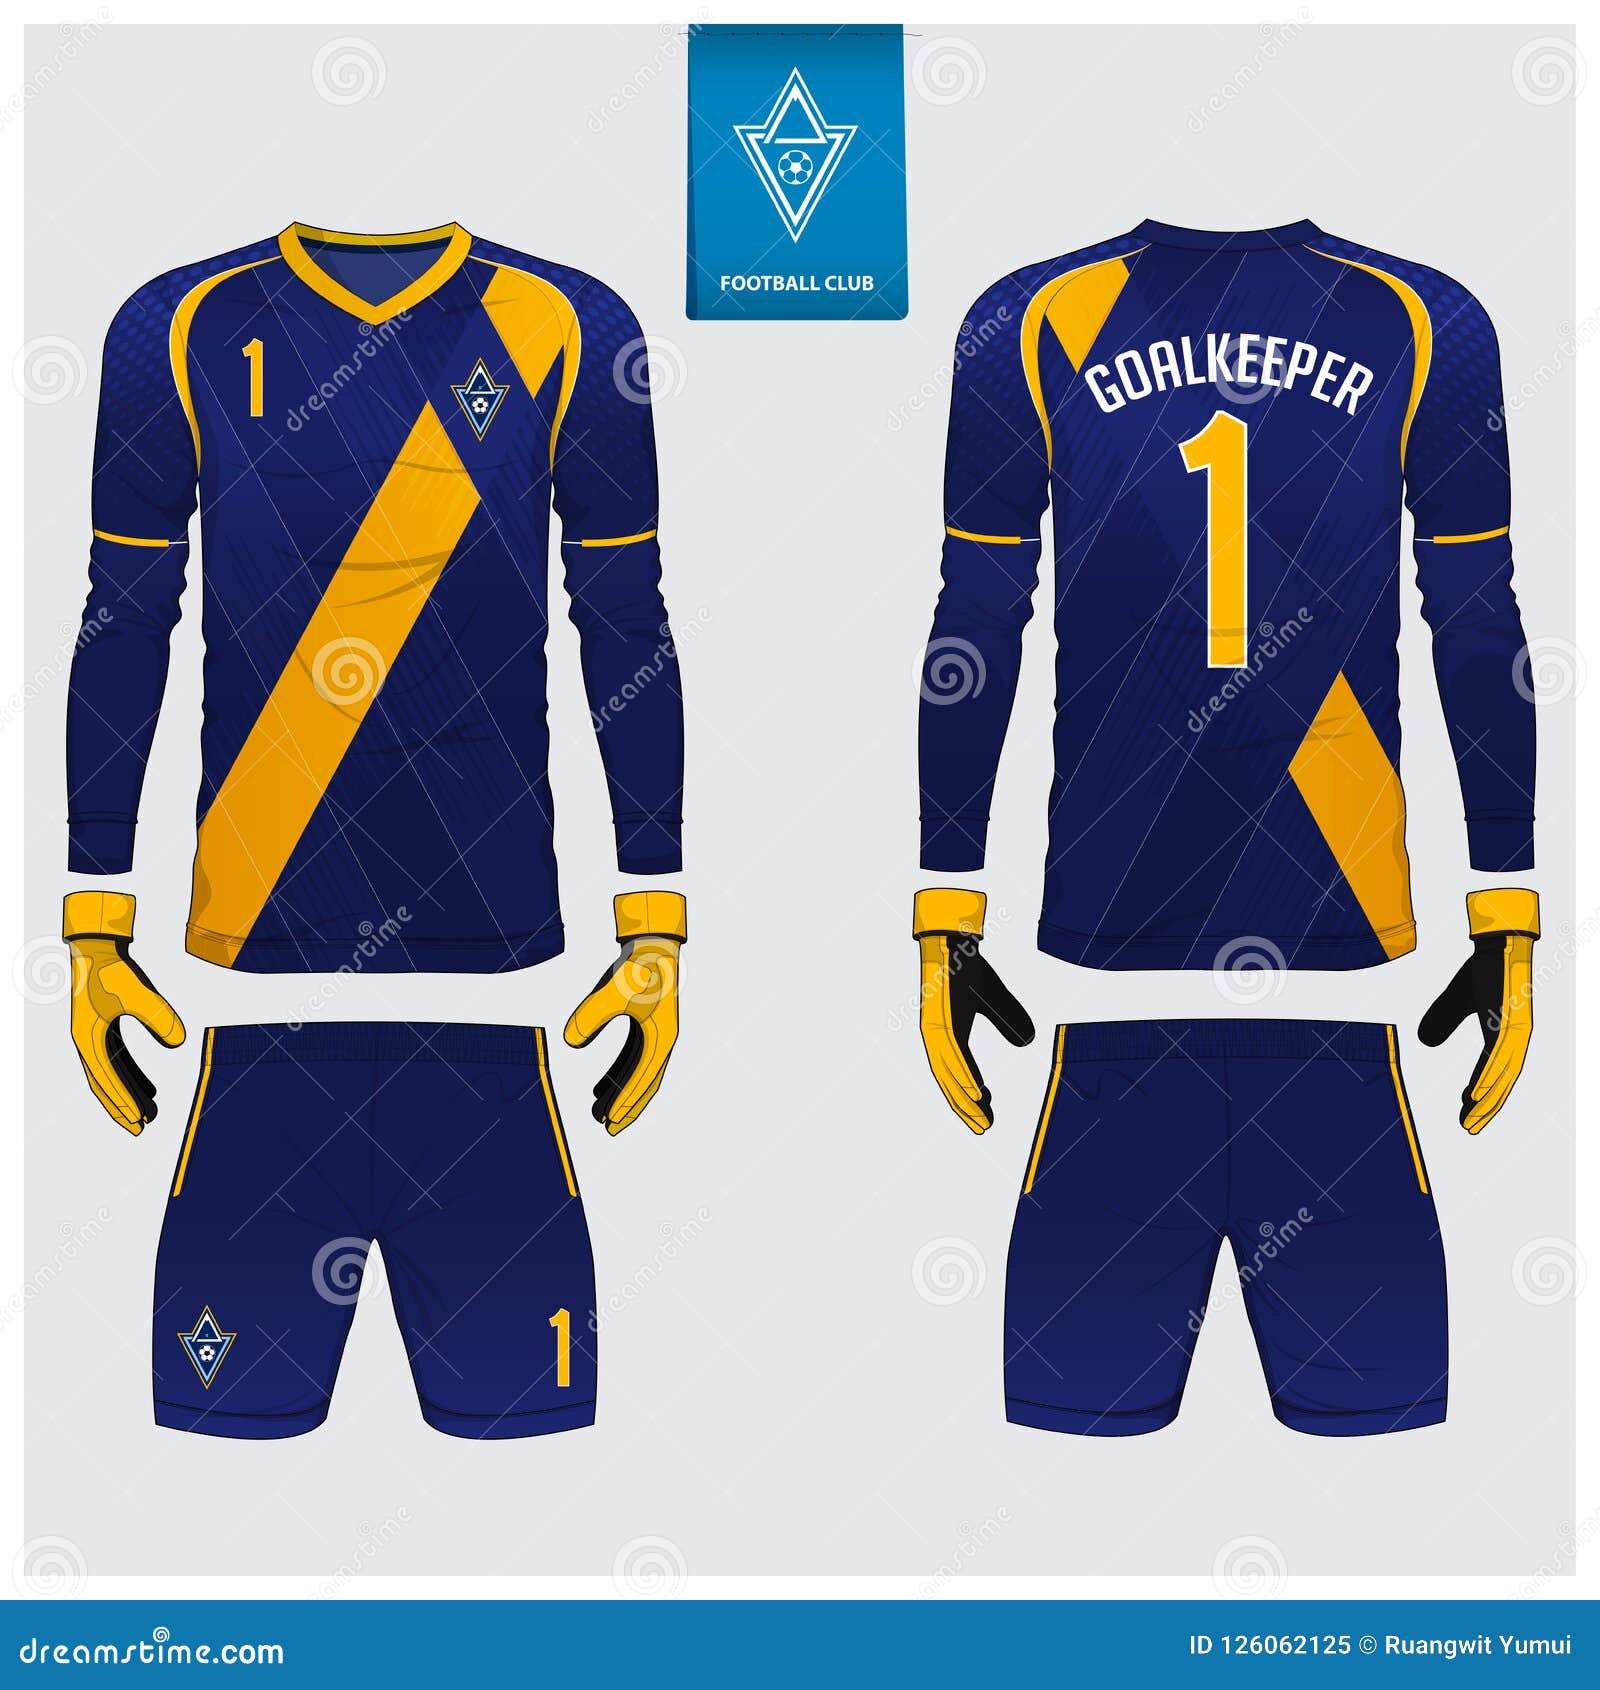 Download Goalkeeper Jersey Or Soccer Kit, Long Sleeve Jersey ...